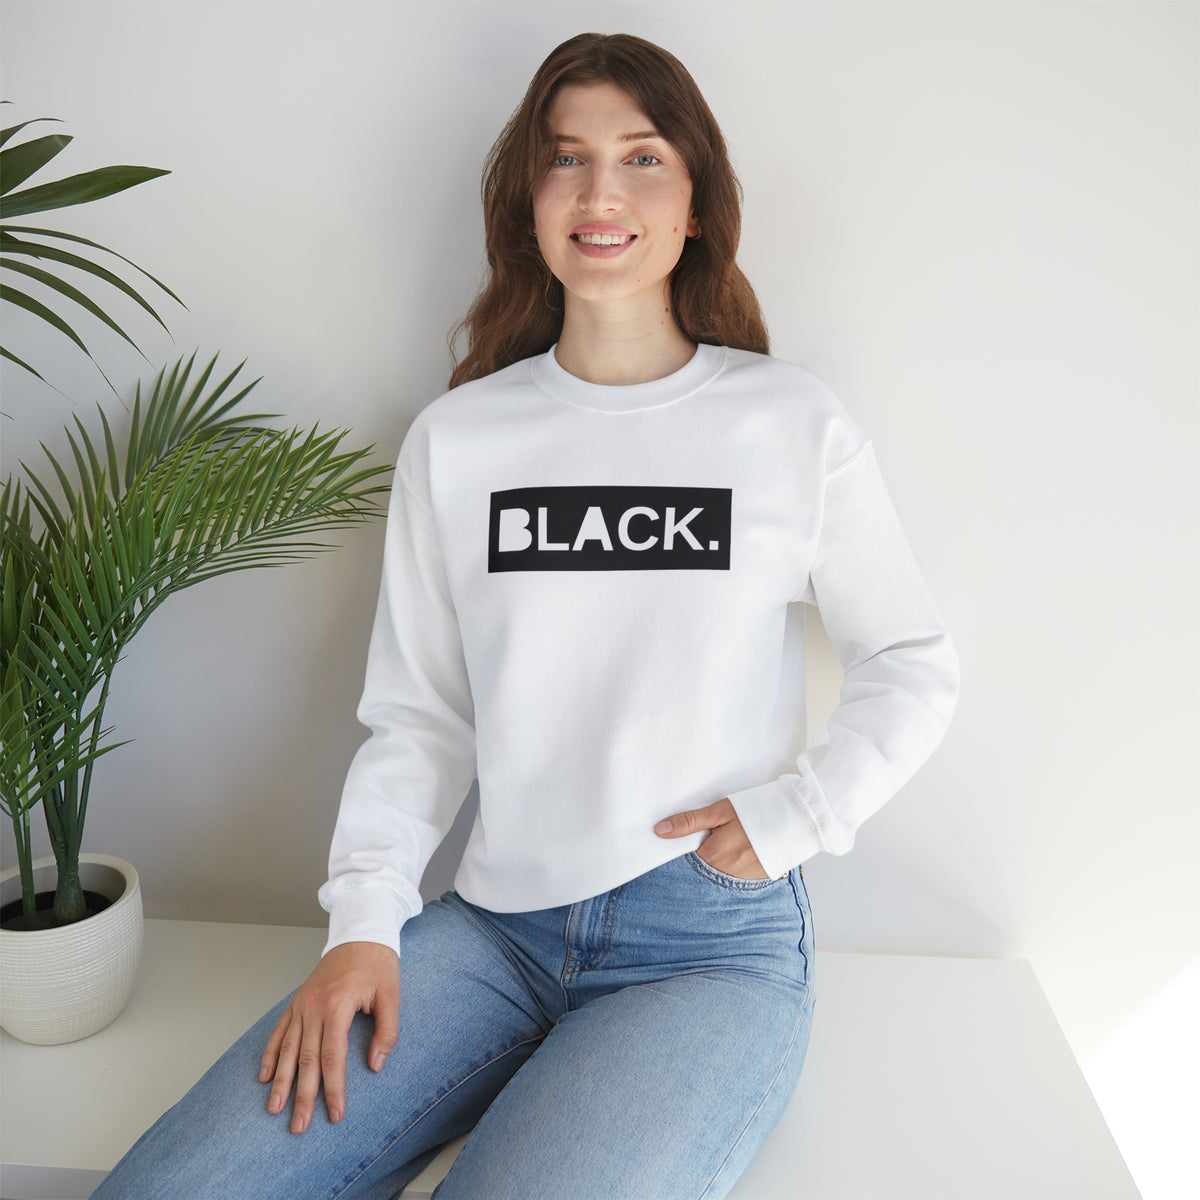 Our BLACK and white Unisex Crewneck Sweatshirt